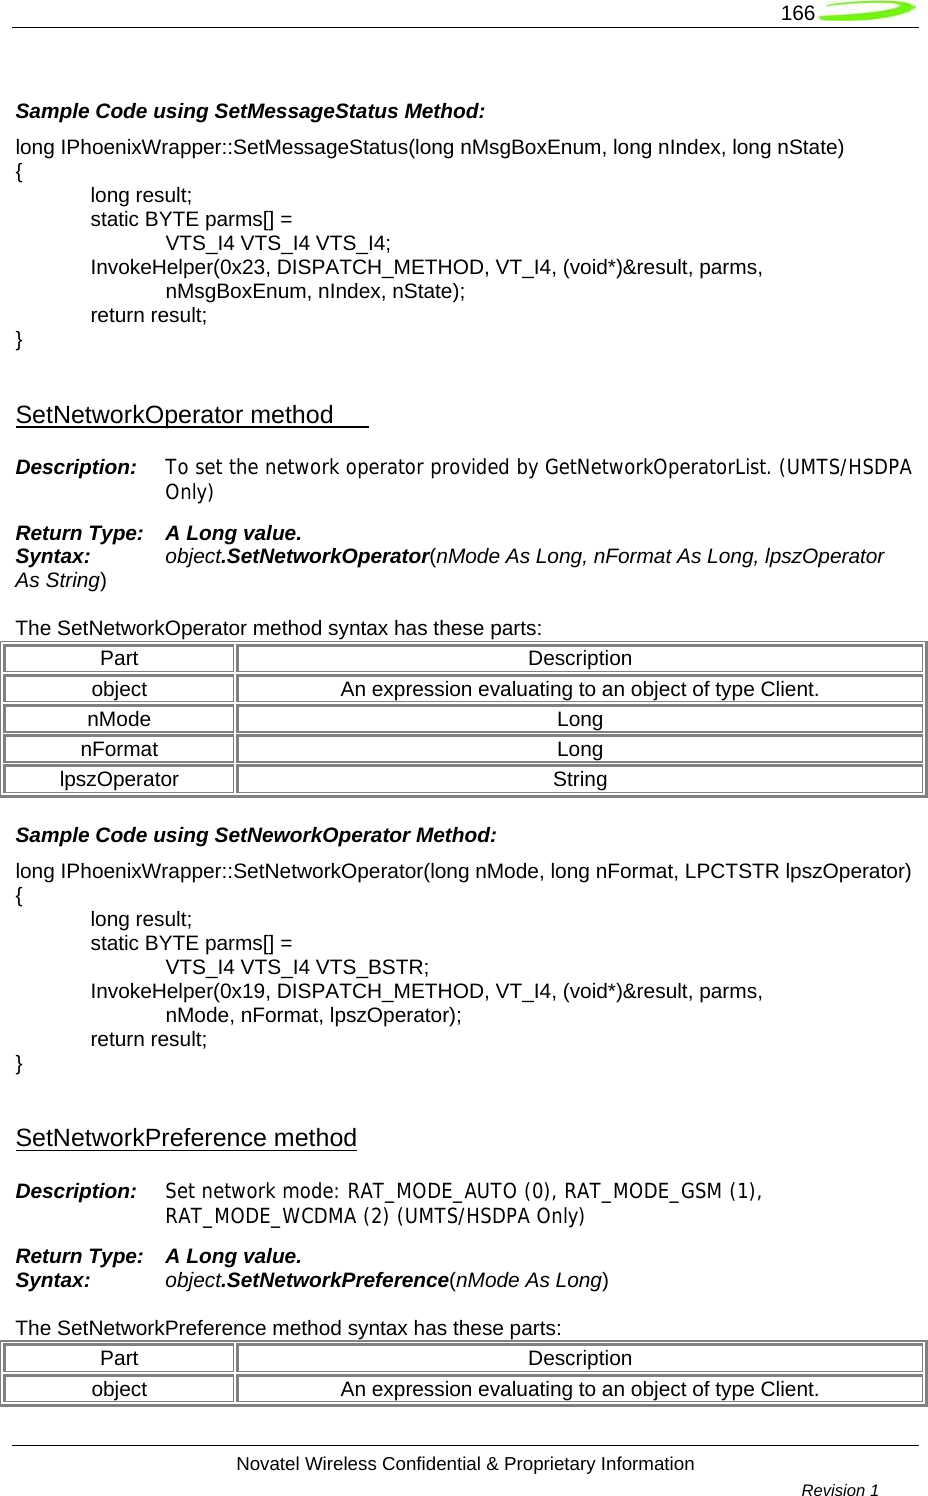   166  Novatel Wireless Confidential &amp; Proprietary Information        Revision 1    Sample Code using SetMessageStatus Method: long IPhoenixWrapper::SetMessageStatus(long nMsgBoxEnum, long nIndex, long nState) {  long result;   static BYTE parms[] =   VTS_I4 VTS_I4 VTS_I4;  InvokeHelper(0x23, DISPATCH_METHOD, VT_I4, (void*)&amp;result, parms,   nMsgBoxEnum, nIndex, nState);  return result; }  SetNetworkOperator method       Description:  To set the network operator provided by GetNetworkOperatorList. (UMTS/HSDPA Only) Return Type:  A Long value. Syntax:  object.SetNetworkOperator(nMode As Long, nFormat As Long, lpszOperator As String)  The SetNetworkOperator method syntax has these parts: Part Description object  An expression evaluating to an object of type Client. nMode Long nFormat Long lpszOperator String Sample Code using SetNeworkOperator Method: long IPhoenixWrapper::SetNetworkOperator(long nMode, long nFormat, LPCTSTR lpszOperator) {  long result;   static BYTE parms[] =   VTS_I4 VTS_I4 VTS_BSTR;  InvokeHelper(0x19, DISPATCH_METHOD, VT_I4, (void*)&amp;result, parms,   nMode, nFormat, lpszOperator);  return result; }  SetNetworkPreference method Description:  Set network mode: RAT_MODE_AUTO (0), RAT_MODE_GSM (1), RAT_MODE_WCDMA (2) (UMTS/HSDPA Only) Return Type:  A Long value. Syntax:  object.SetNetworkPreference(nMode As Long)  The SetNetworkPreference method syntax has these parts: Part Description object  An expression evaluating to an object of type Client. 